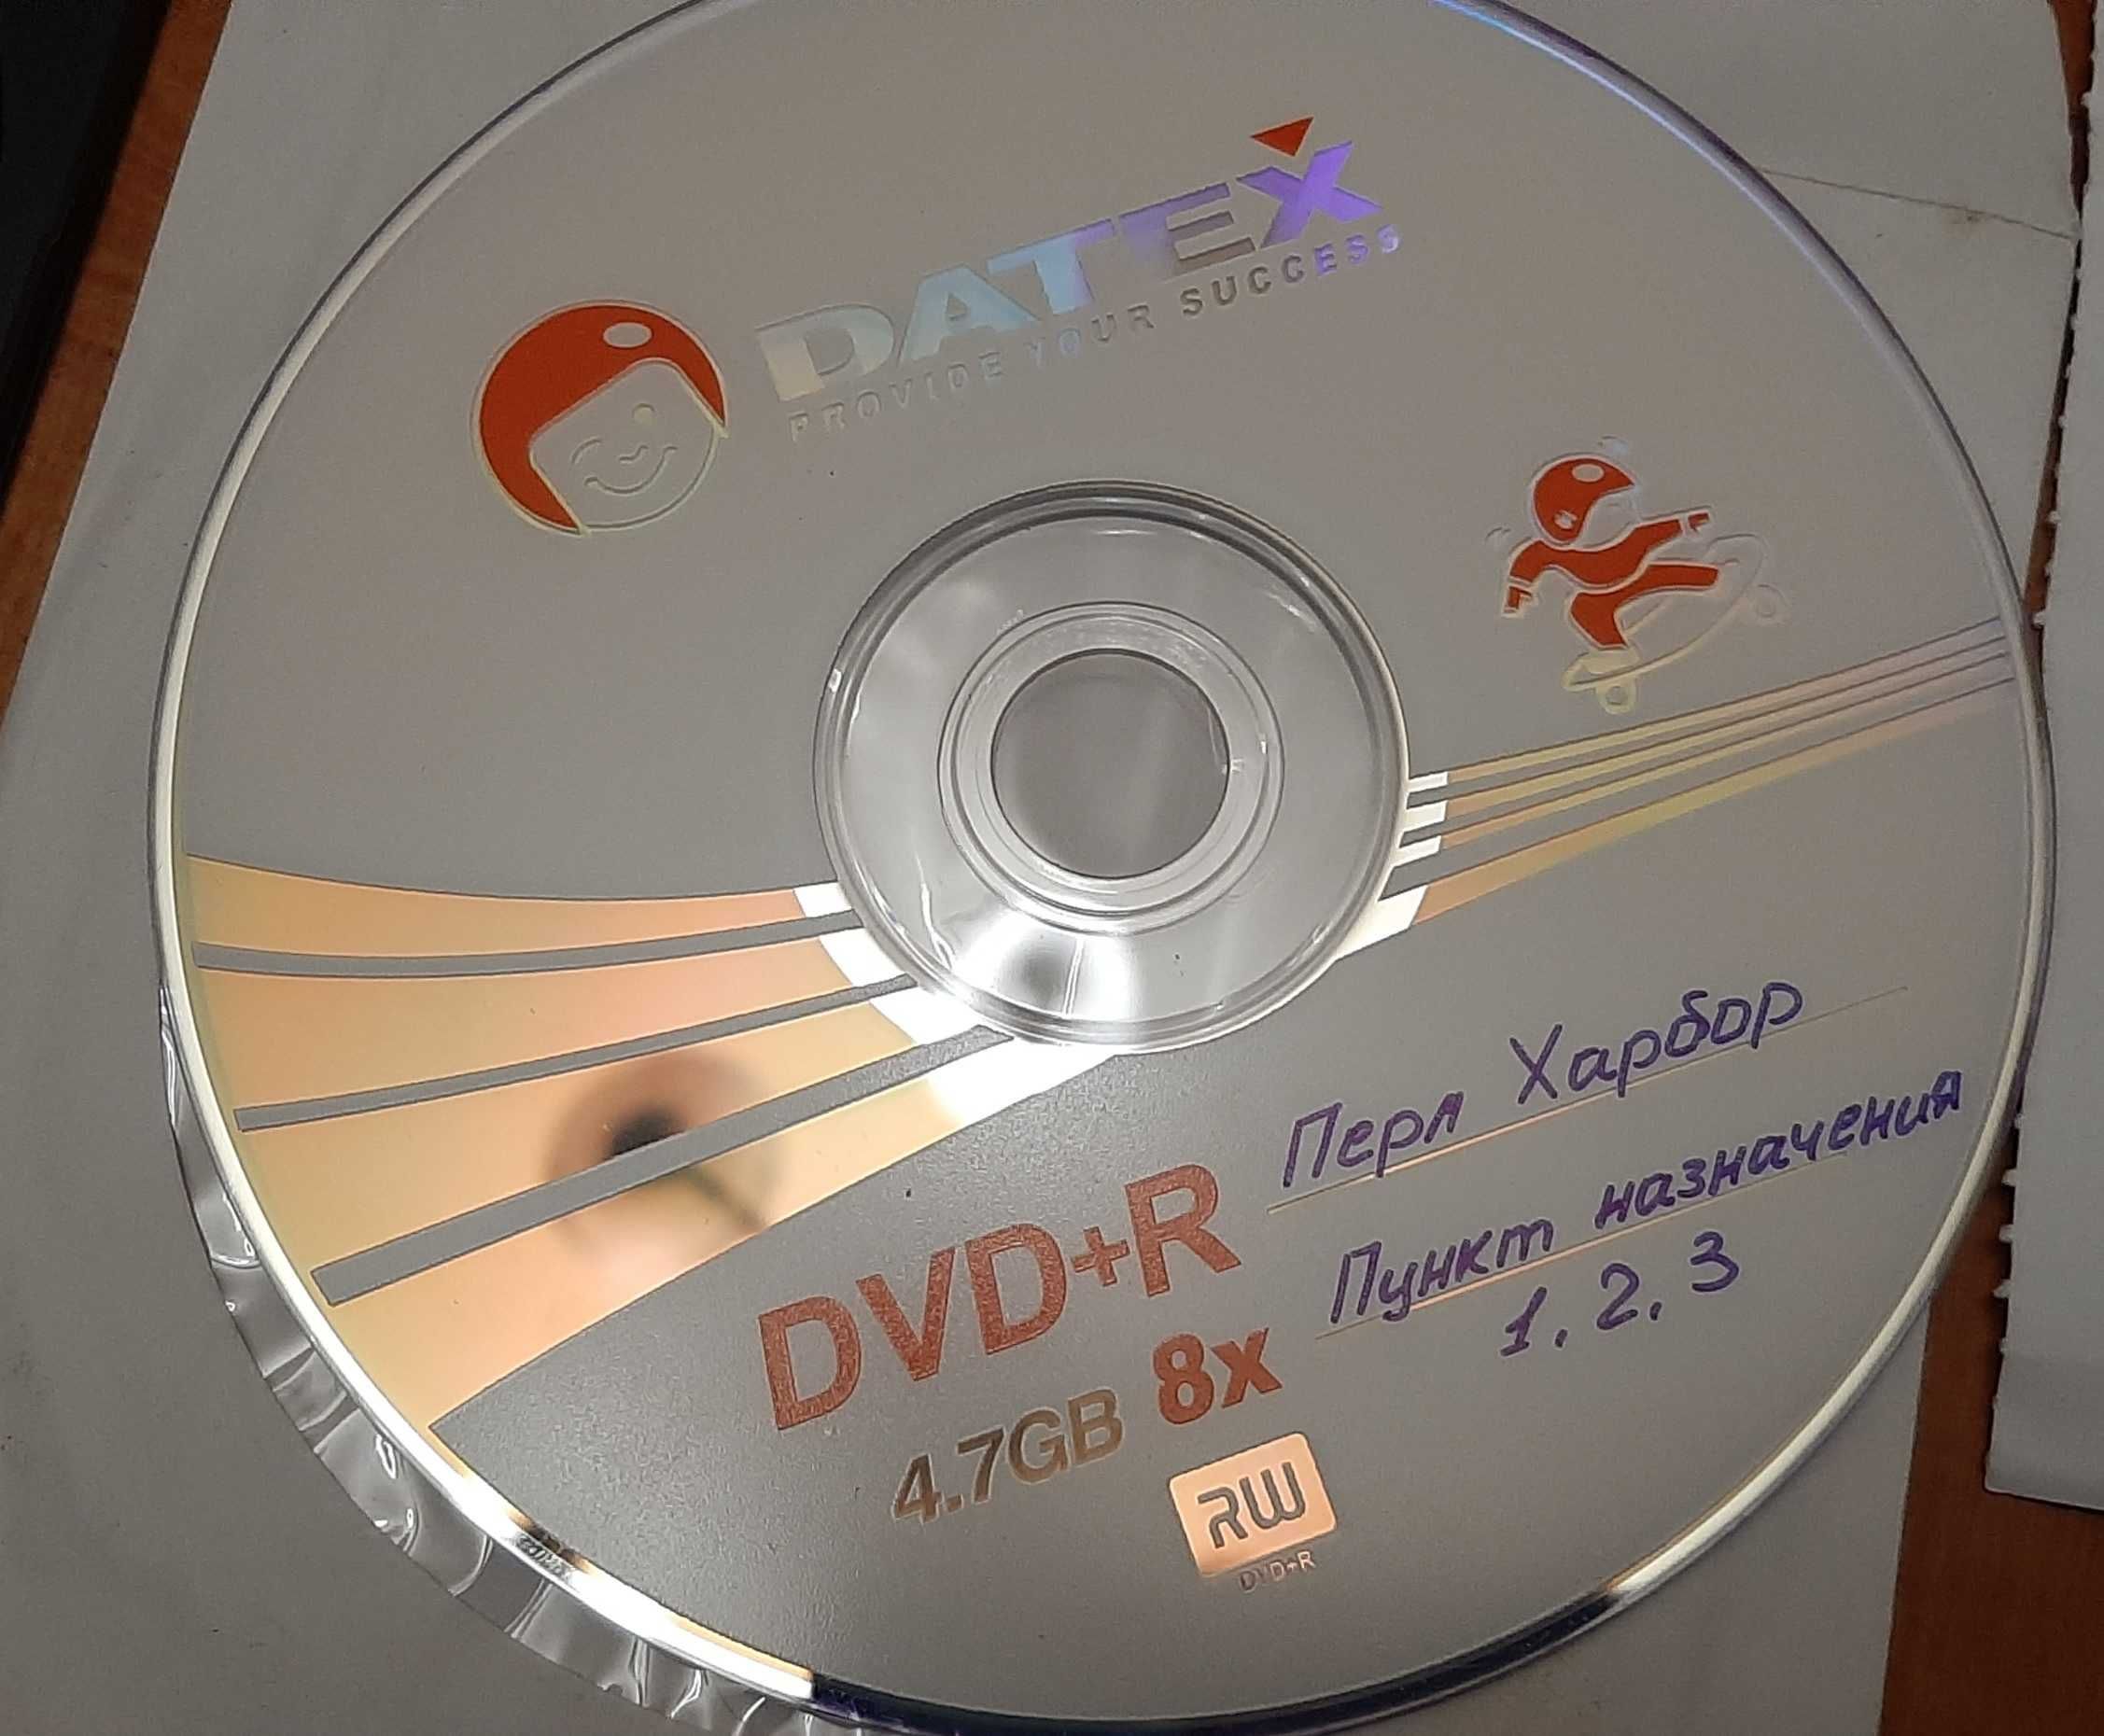 DVD диски фильмы, мультфильмы, программы